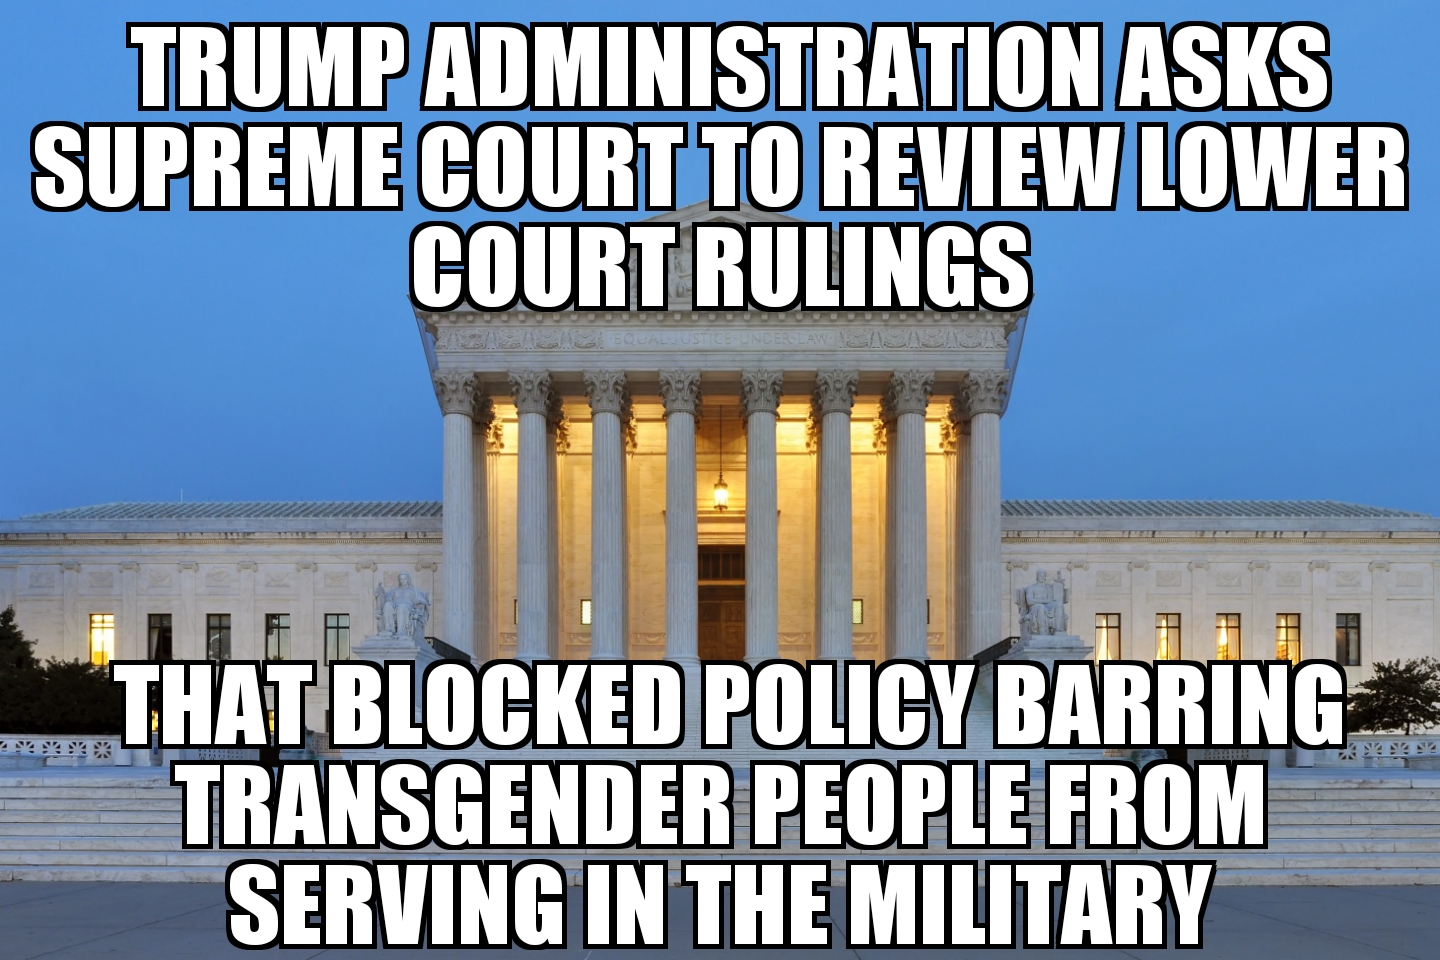 Trump Admin asks Supreme Court to review Transgender military ban